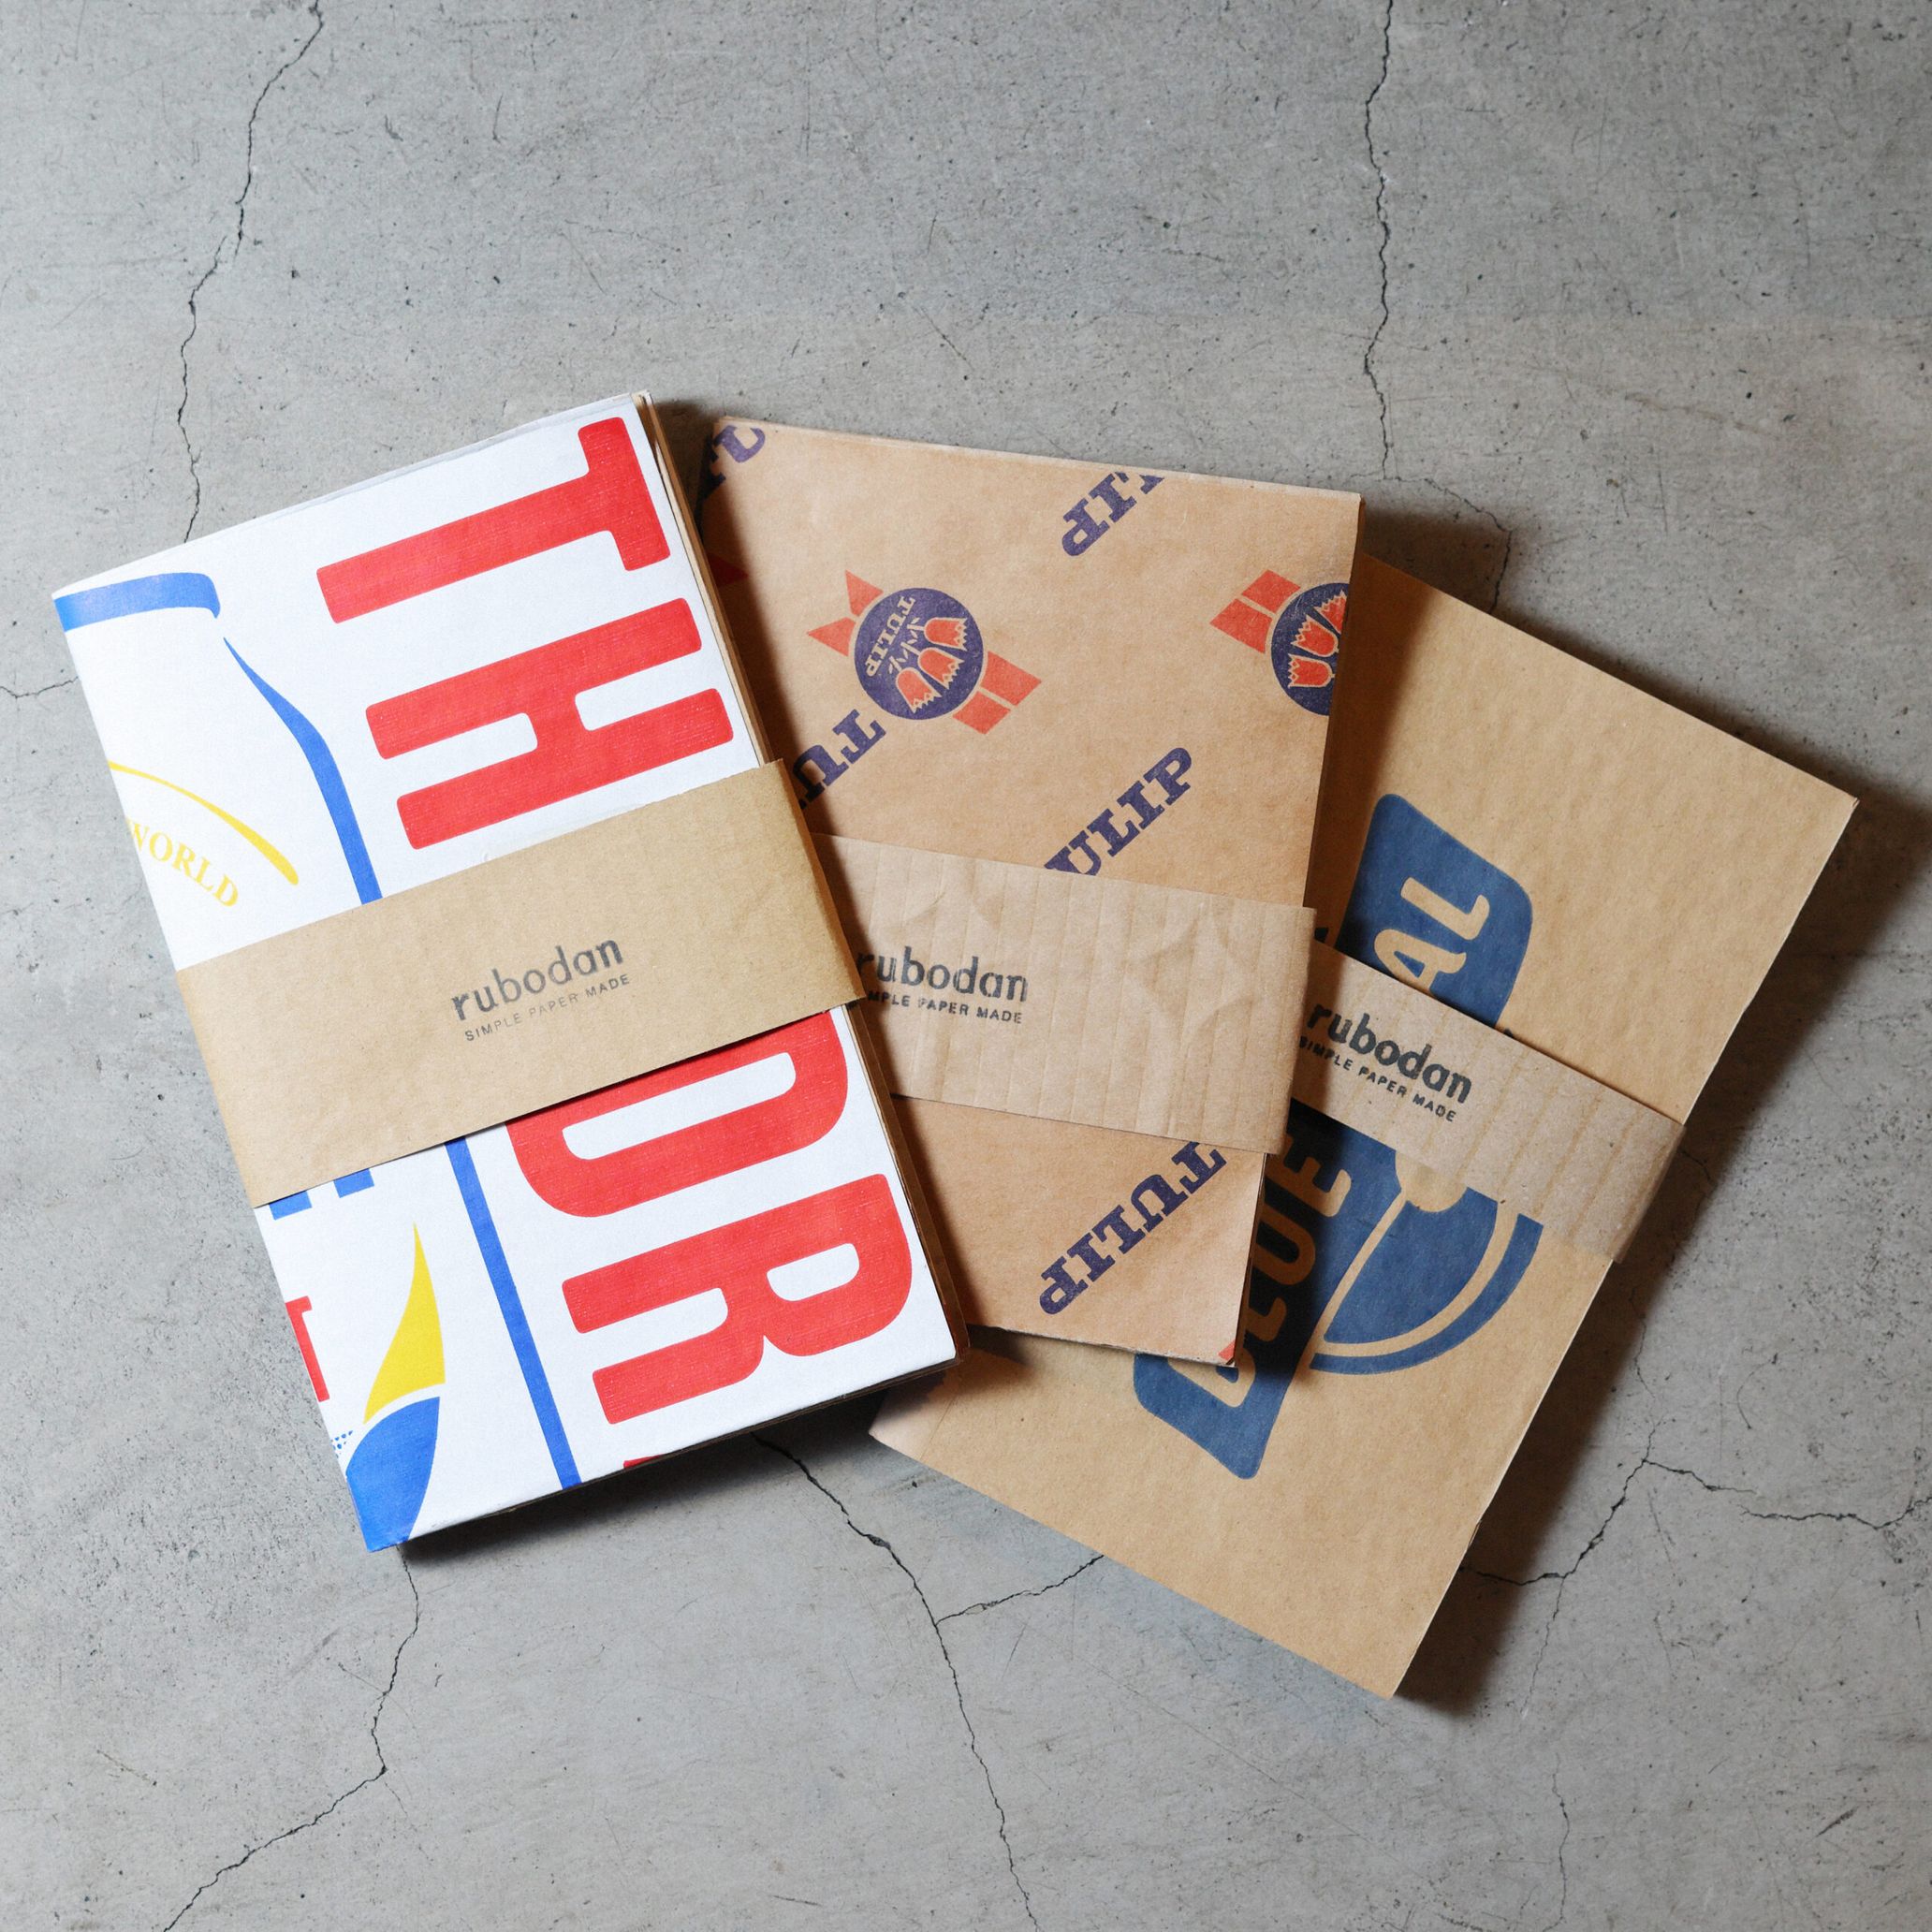 rubodan notebooks made from reused cardboard